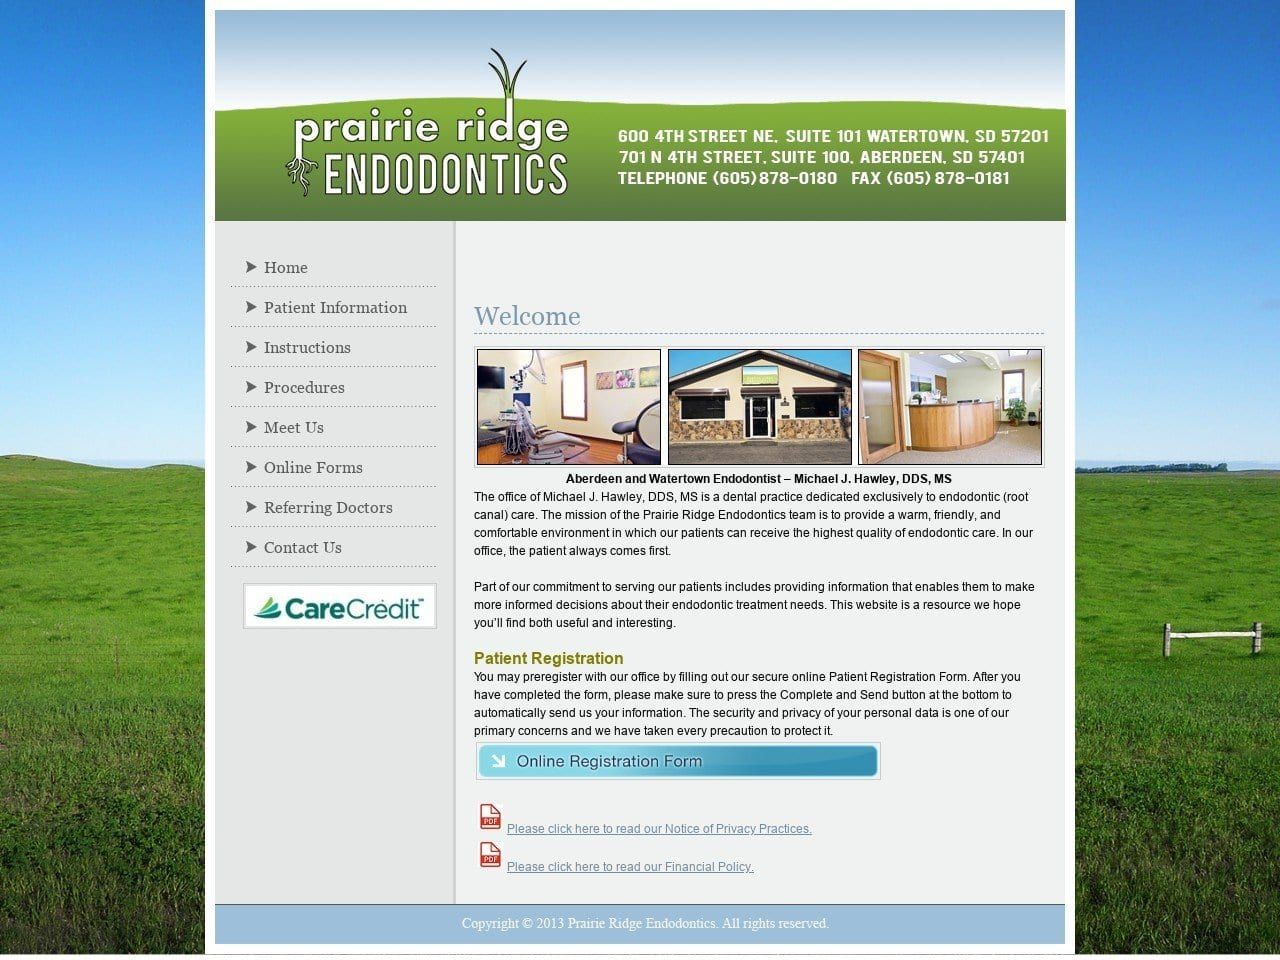 Prairie Ridge Endodontics Website Screenshot from prairieridgeendo.com